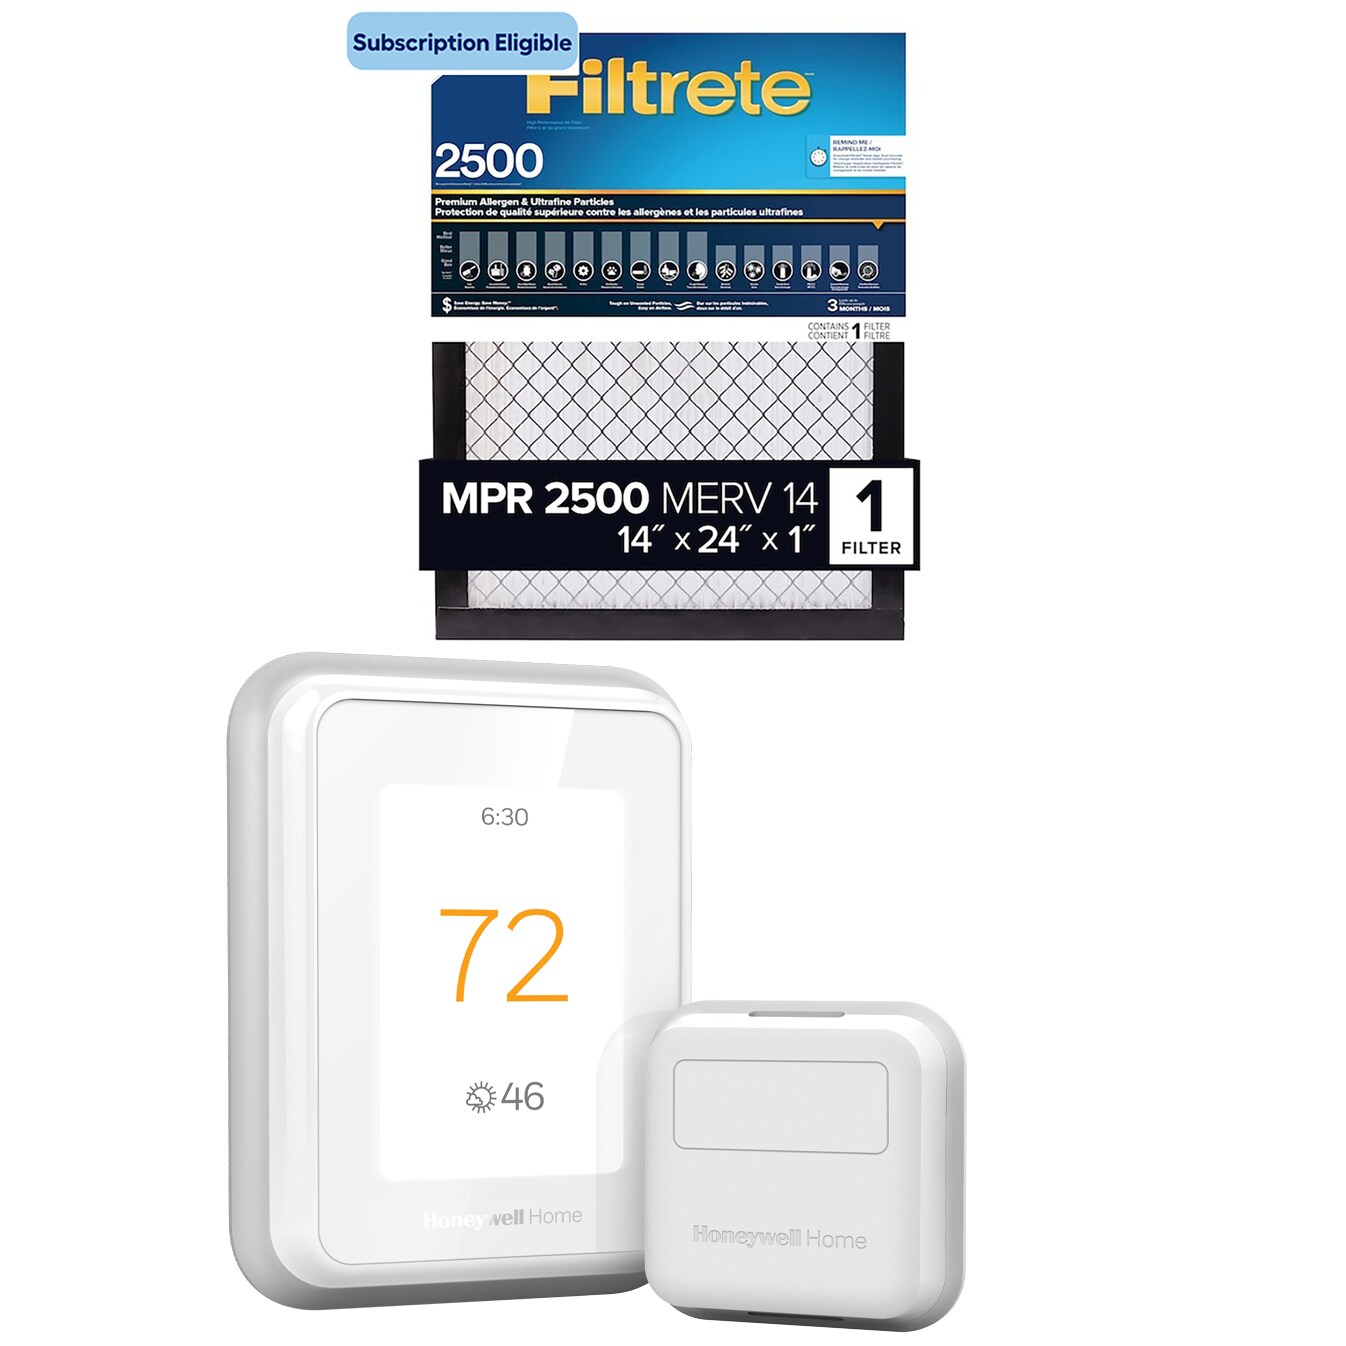 Honeywell Home RCHT9610WF T9 + Smart Room Sensor White Thermostat